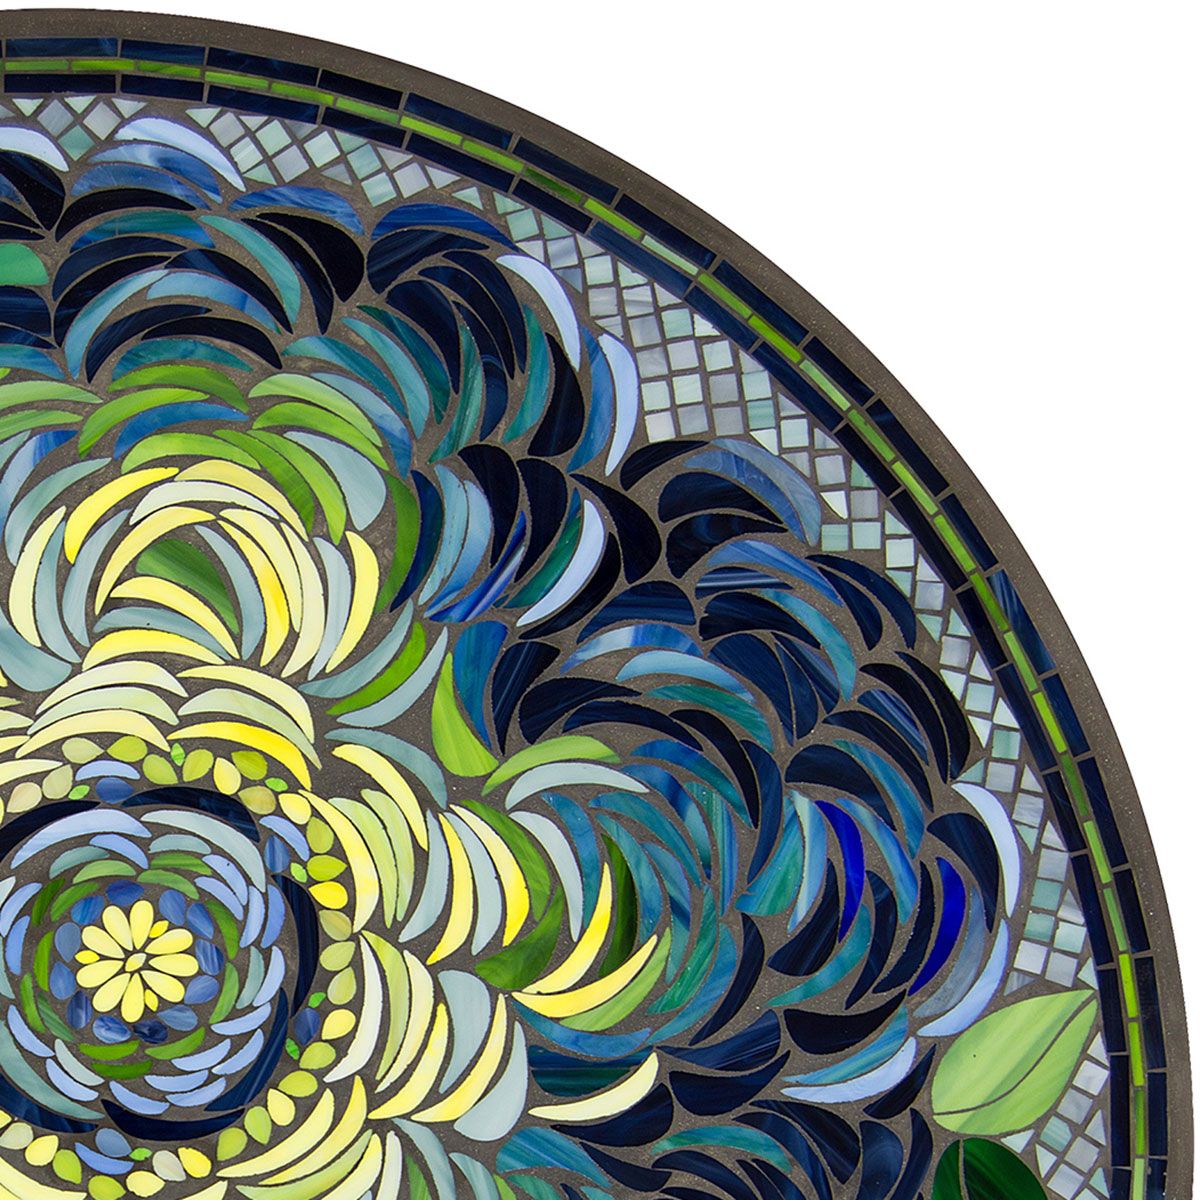 Giovella Mosaic Table Tops | Neille Olson Mosaics - Iron Accents